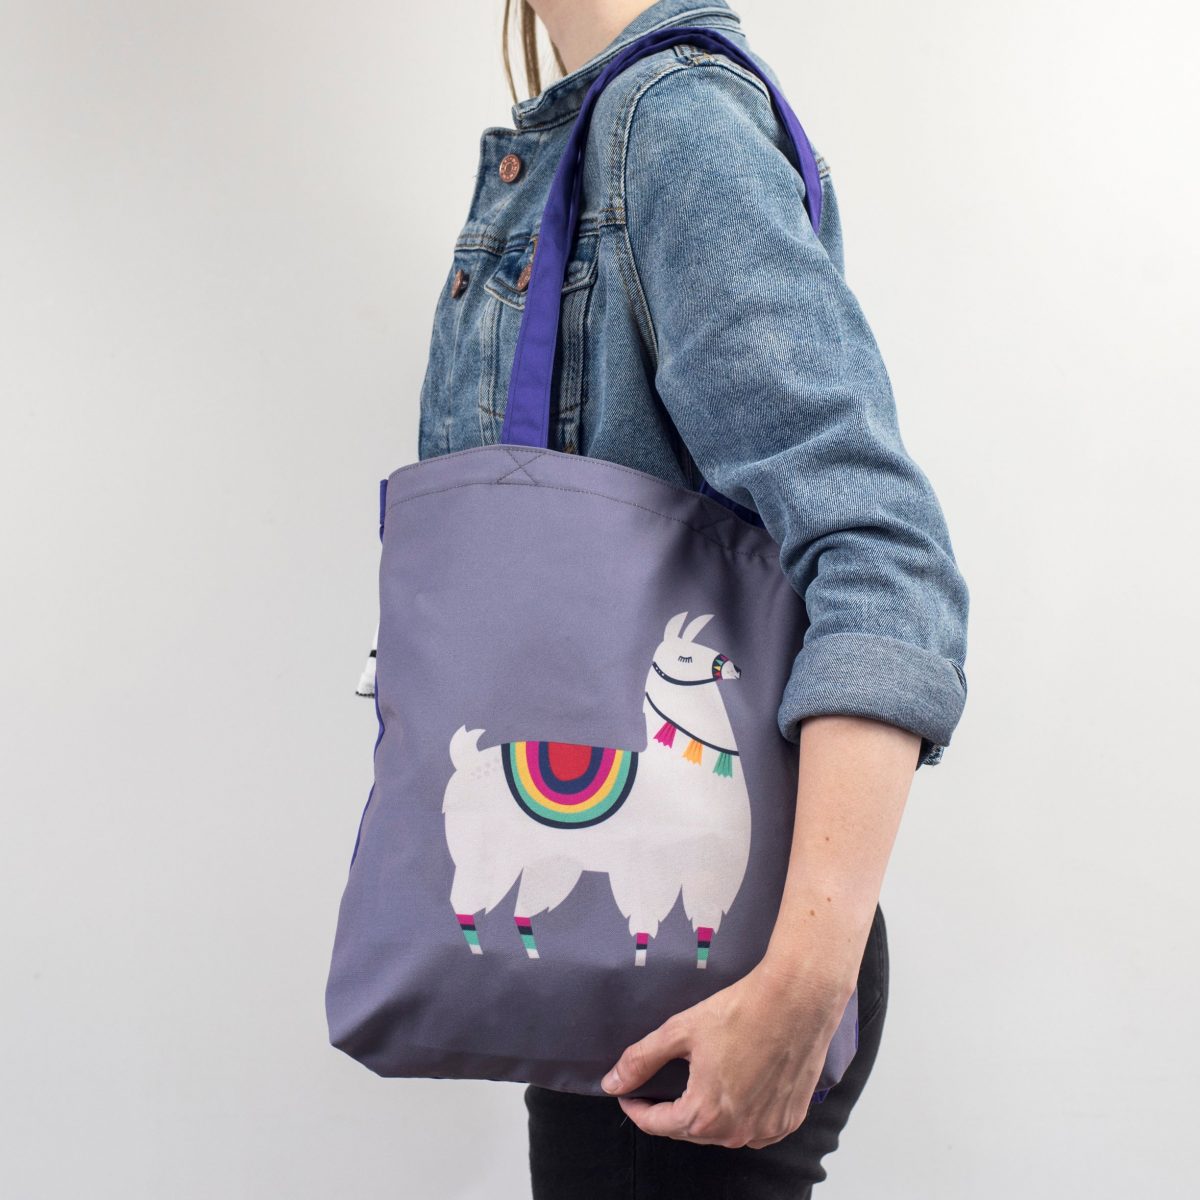 Llama Tote Bag, Llama Birthday Gift for Her, Mexican Design, Alpaca Llama Print, Handmade Canvas Shopping Bag, Kids Book Bag, Purple & Grey